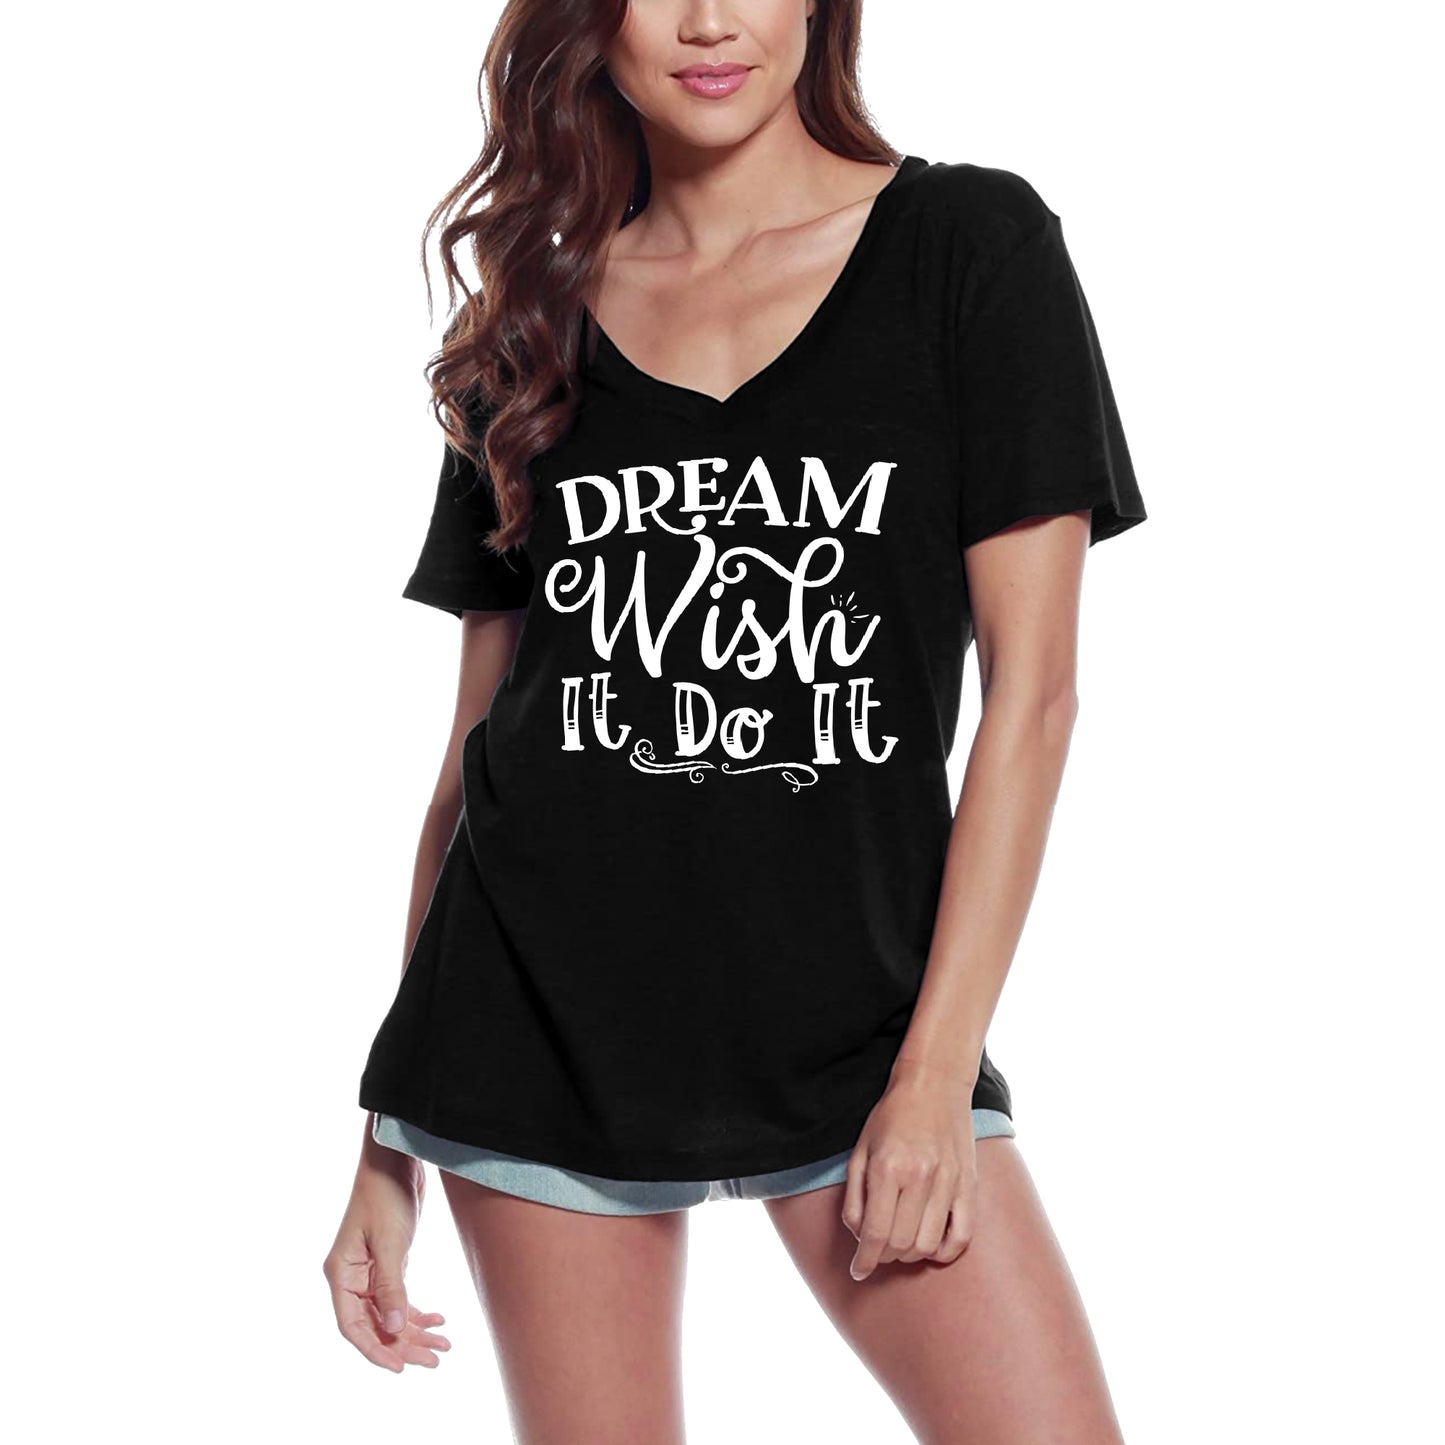 ULTRABASIC Women's T-Shirt Dream Wish It Do It - Short Sleeve Tee Shirt Tops